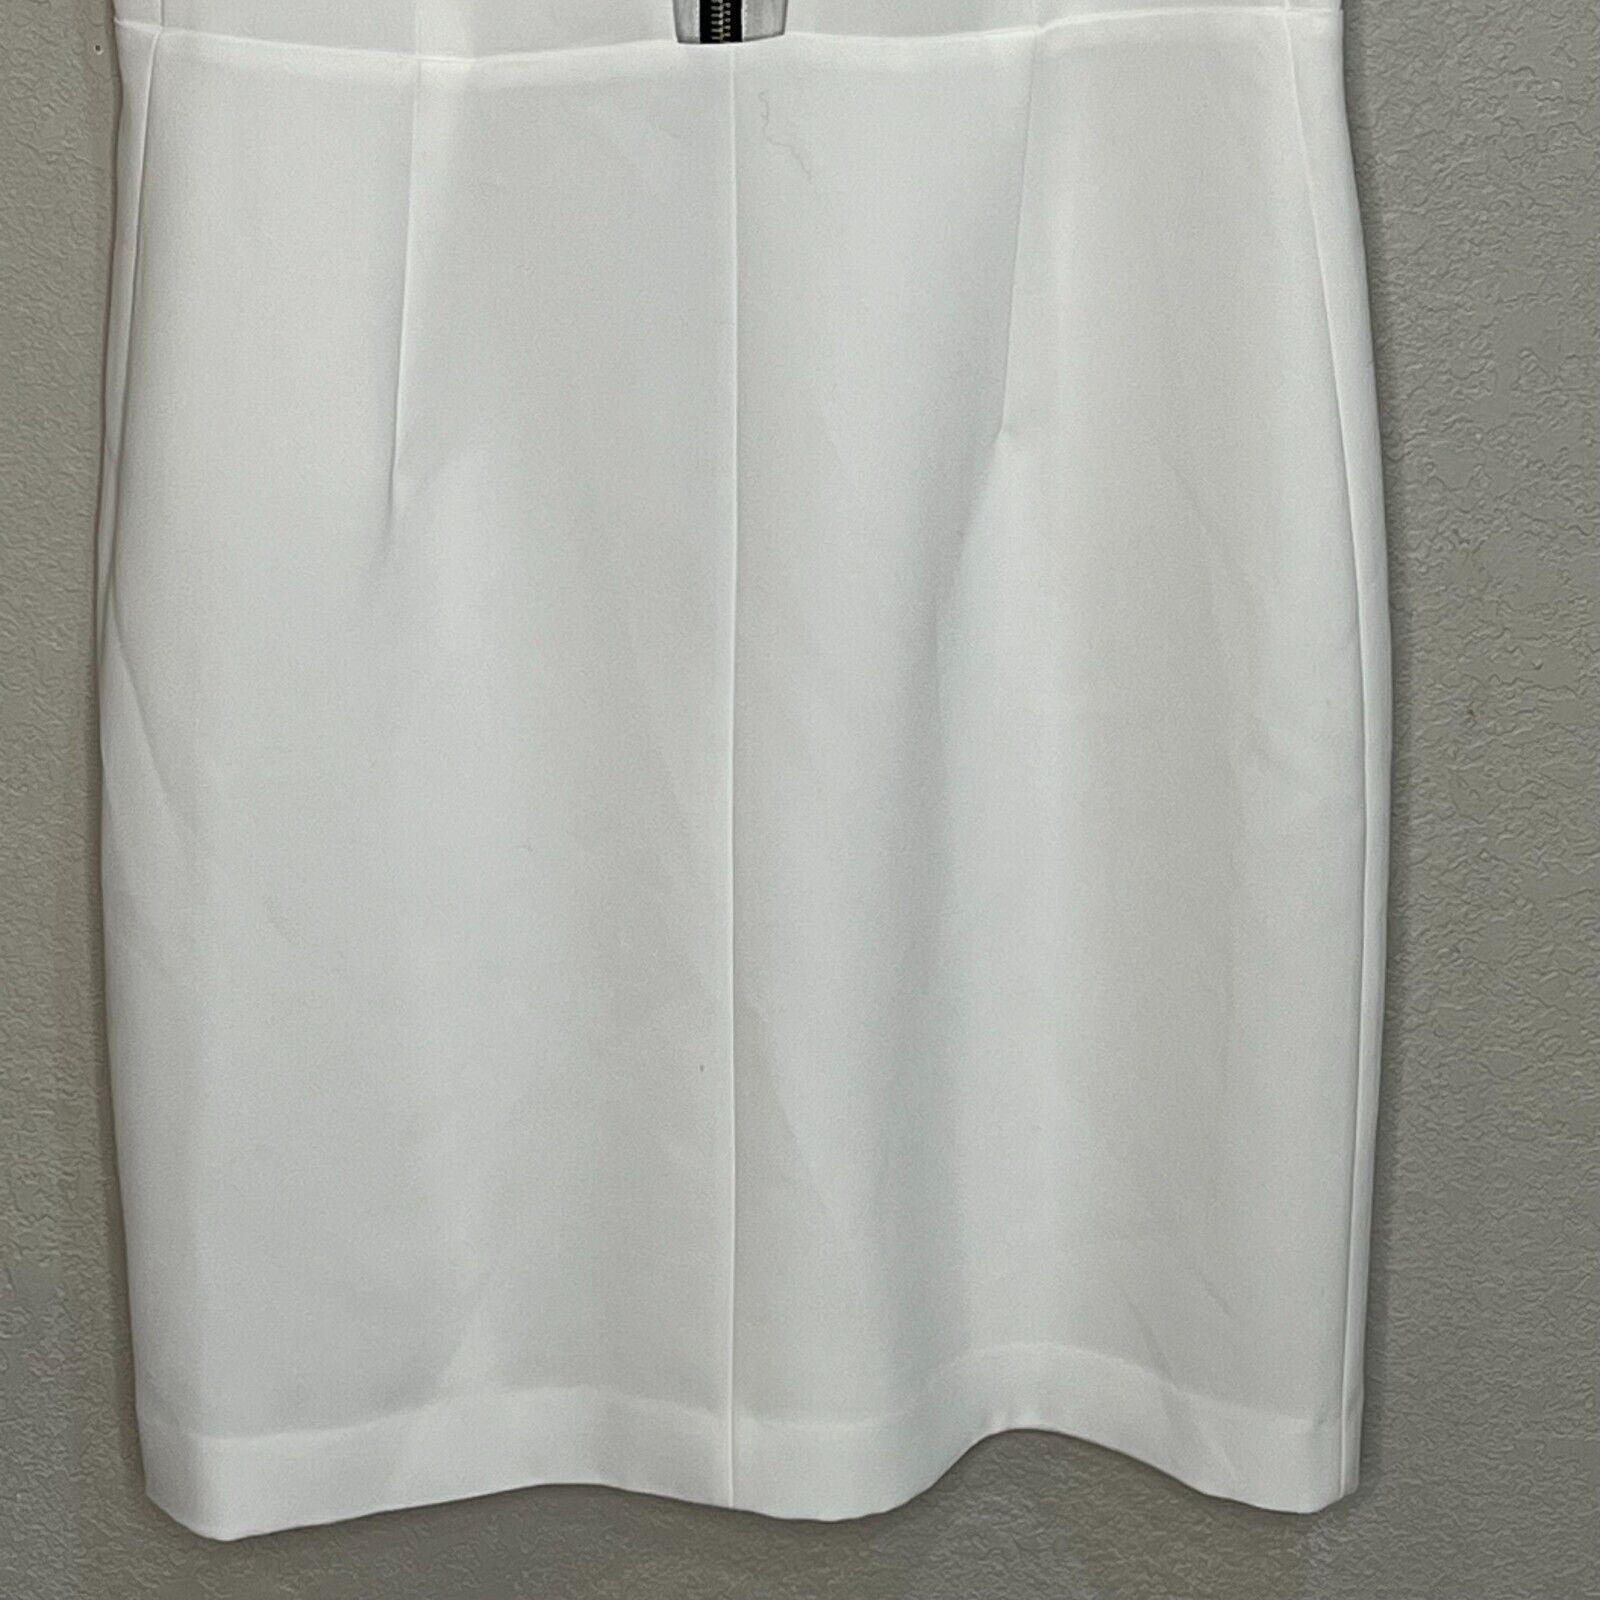 Rag & Bone White Black Cutout Izzy Mini Dress Size 6 NEW $550